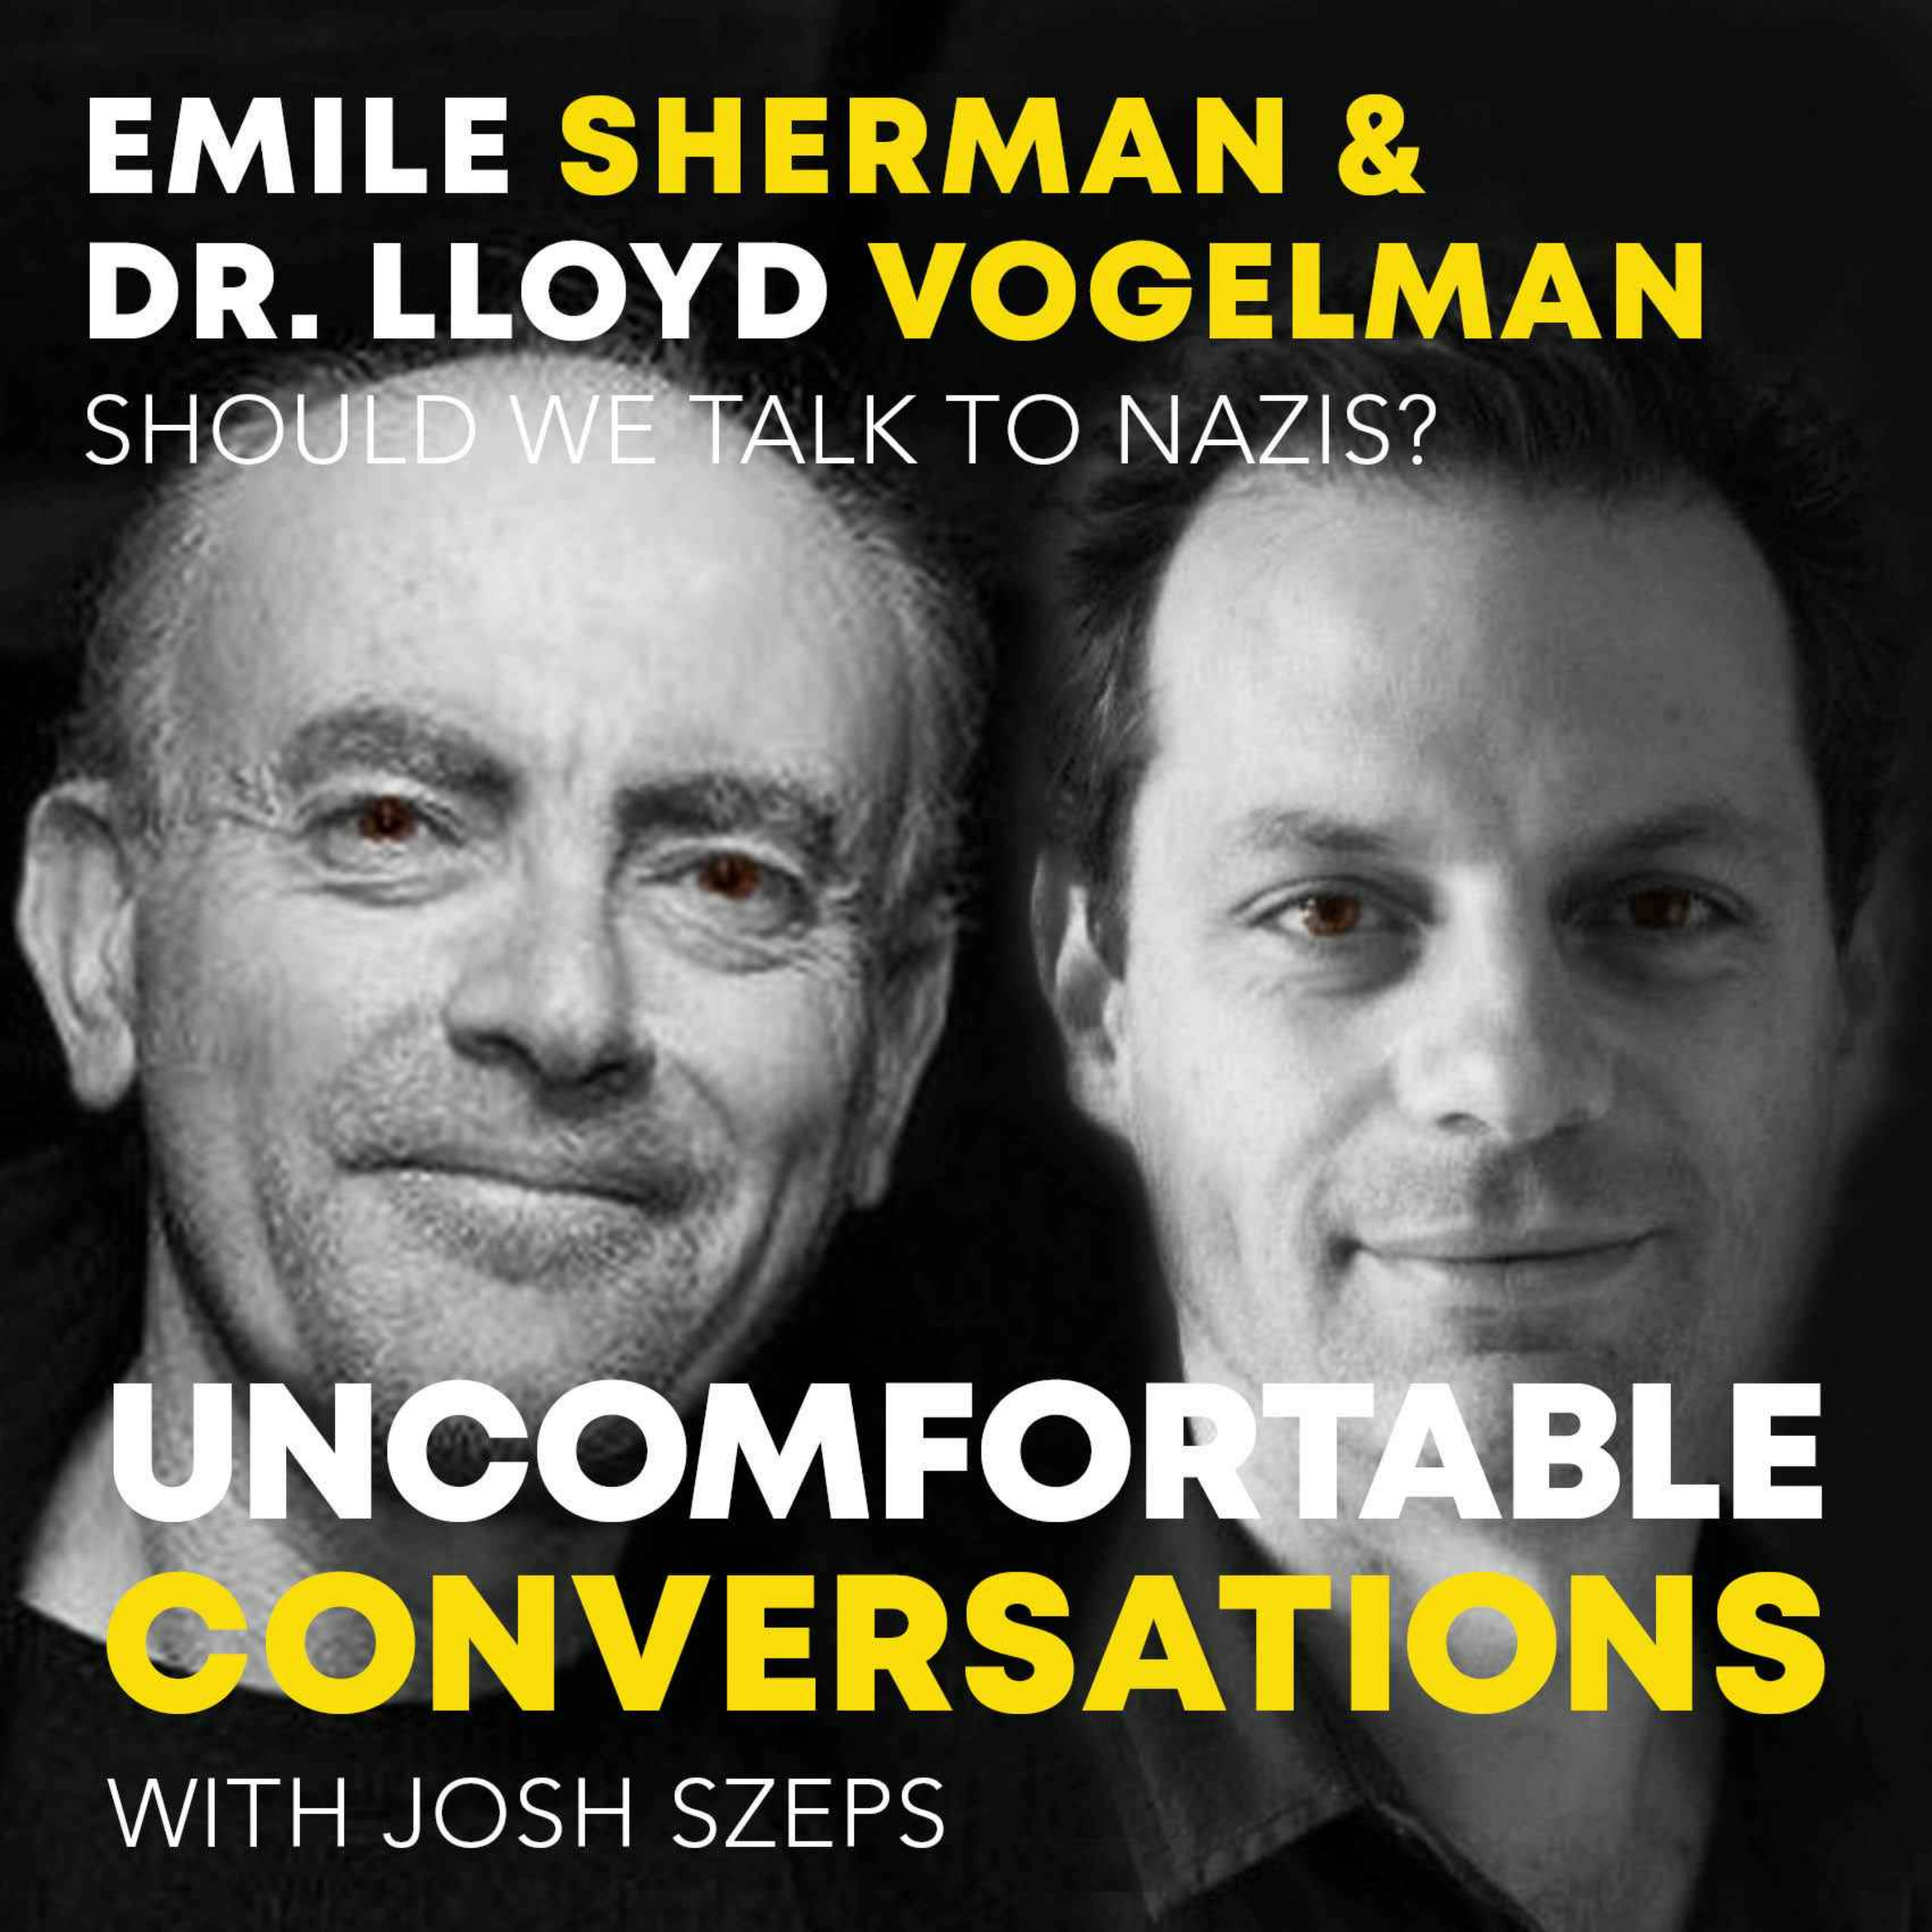 "Should We Talk To Nazis?" with Academy Award winner Emile Sherman & Dr. Lloyd Vogelman